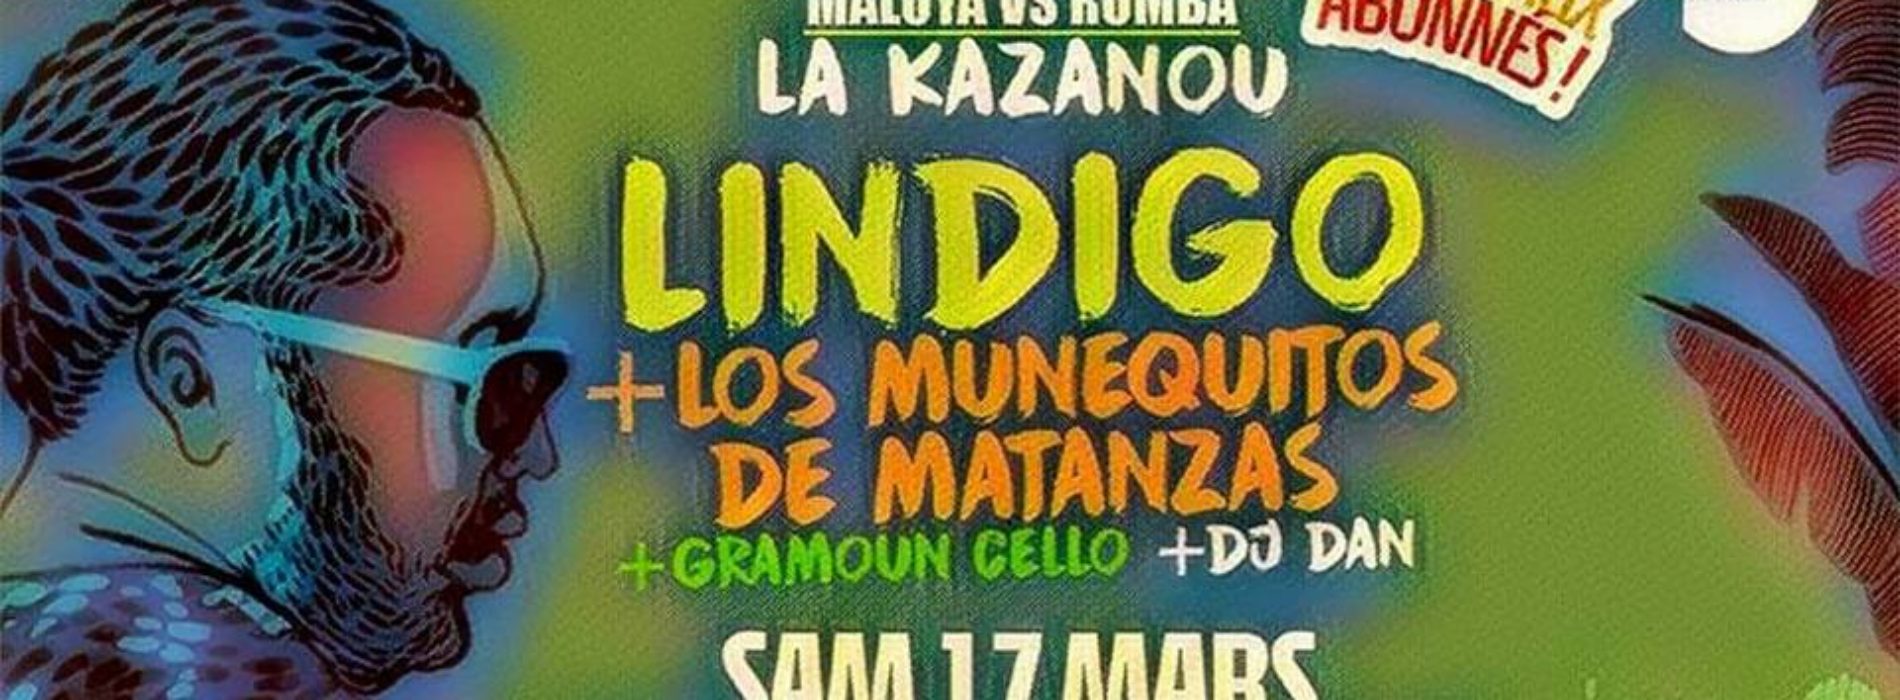 Découvre le nouvel album du groupe LINDIGO – KOMSA GAYAR – Mars 2018 – MALOYA